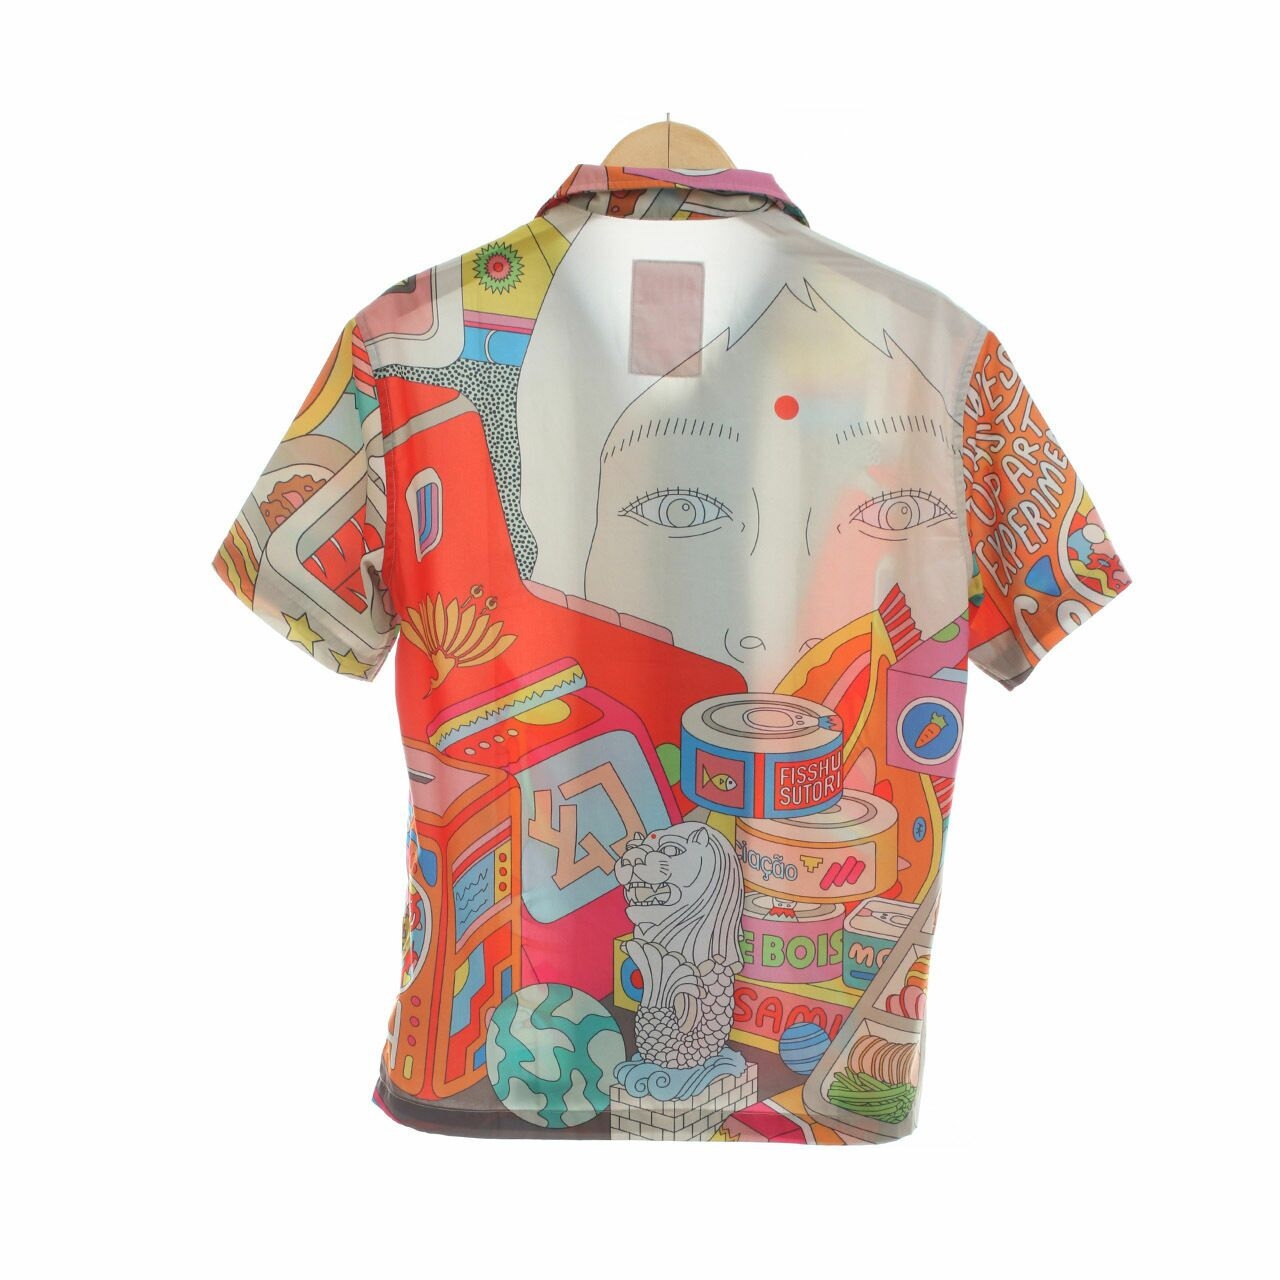 Artist Attire Multi Pattern Shirt	